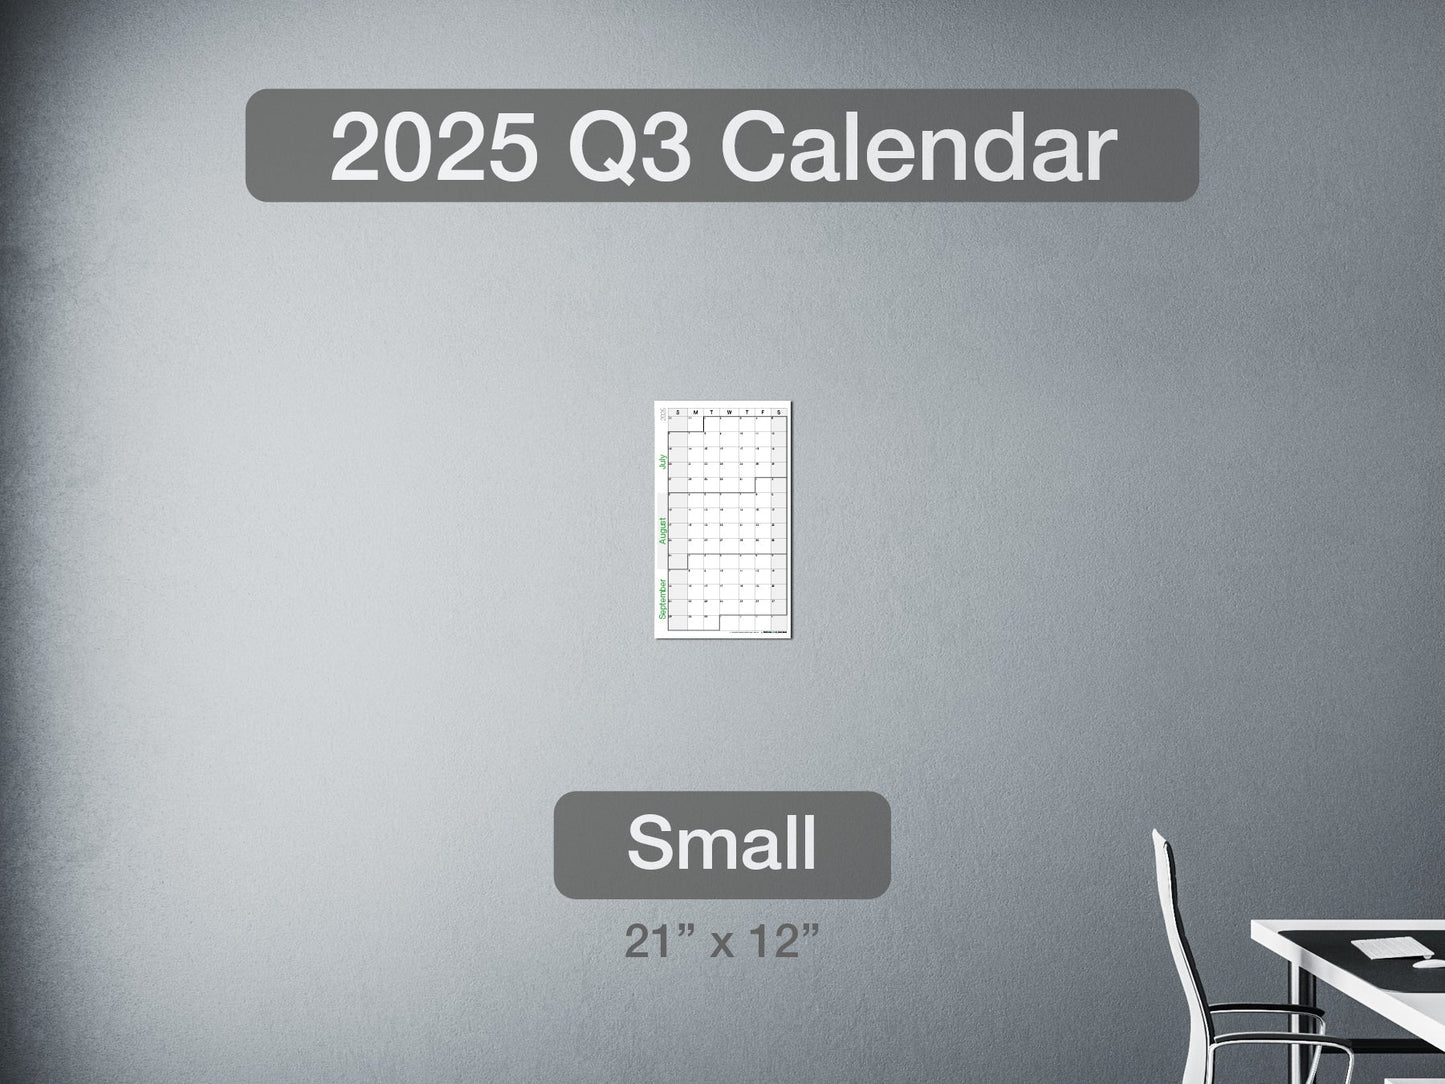 2025 Q3 Calendar Small